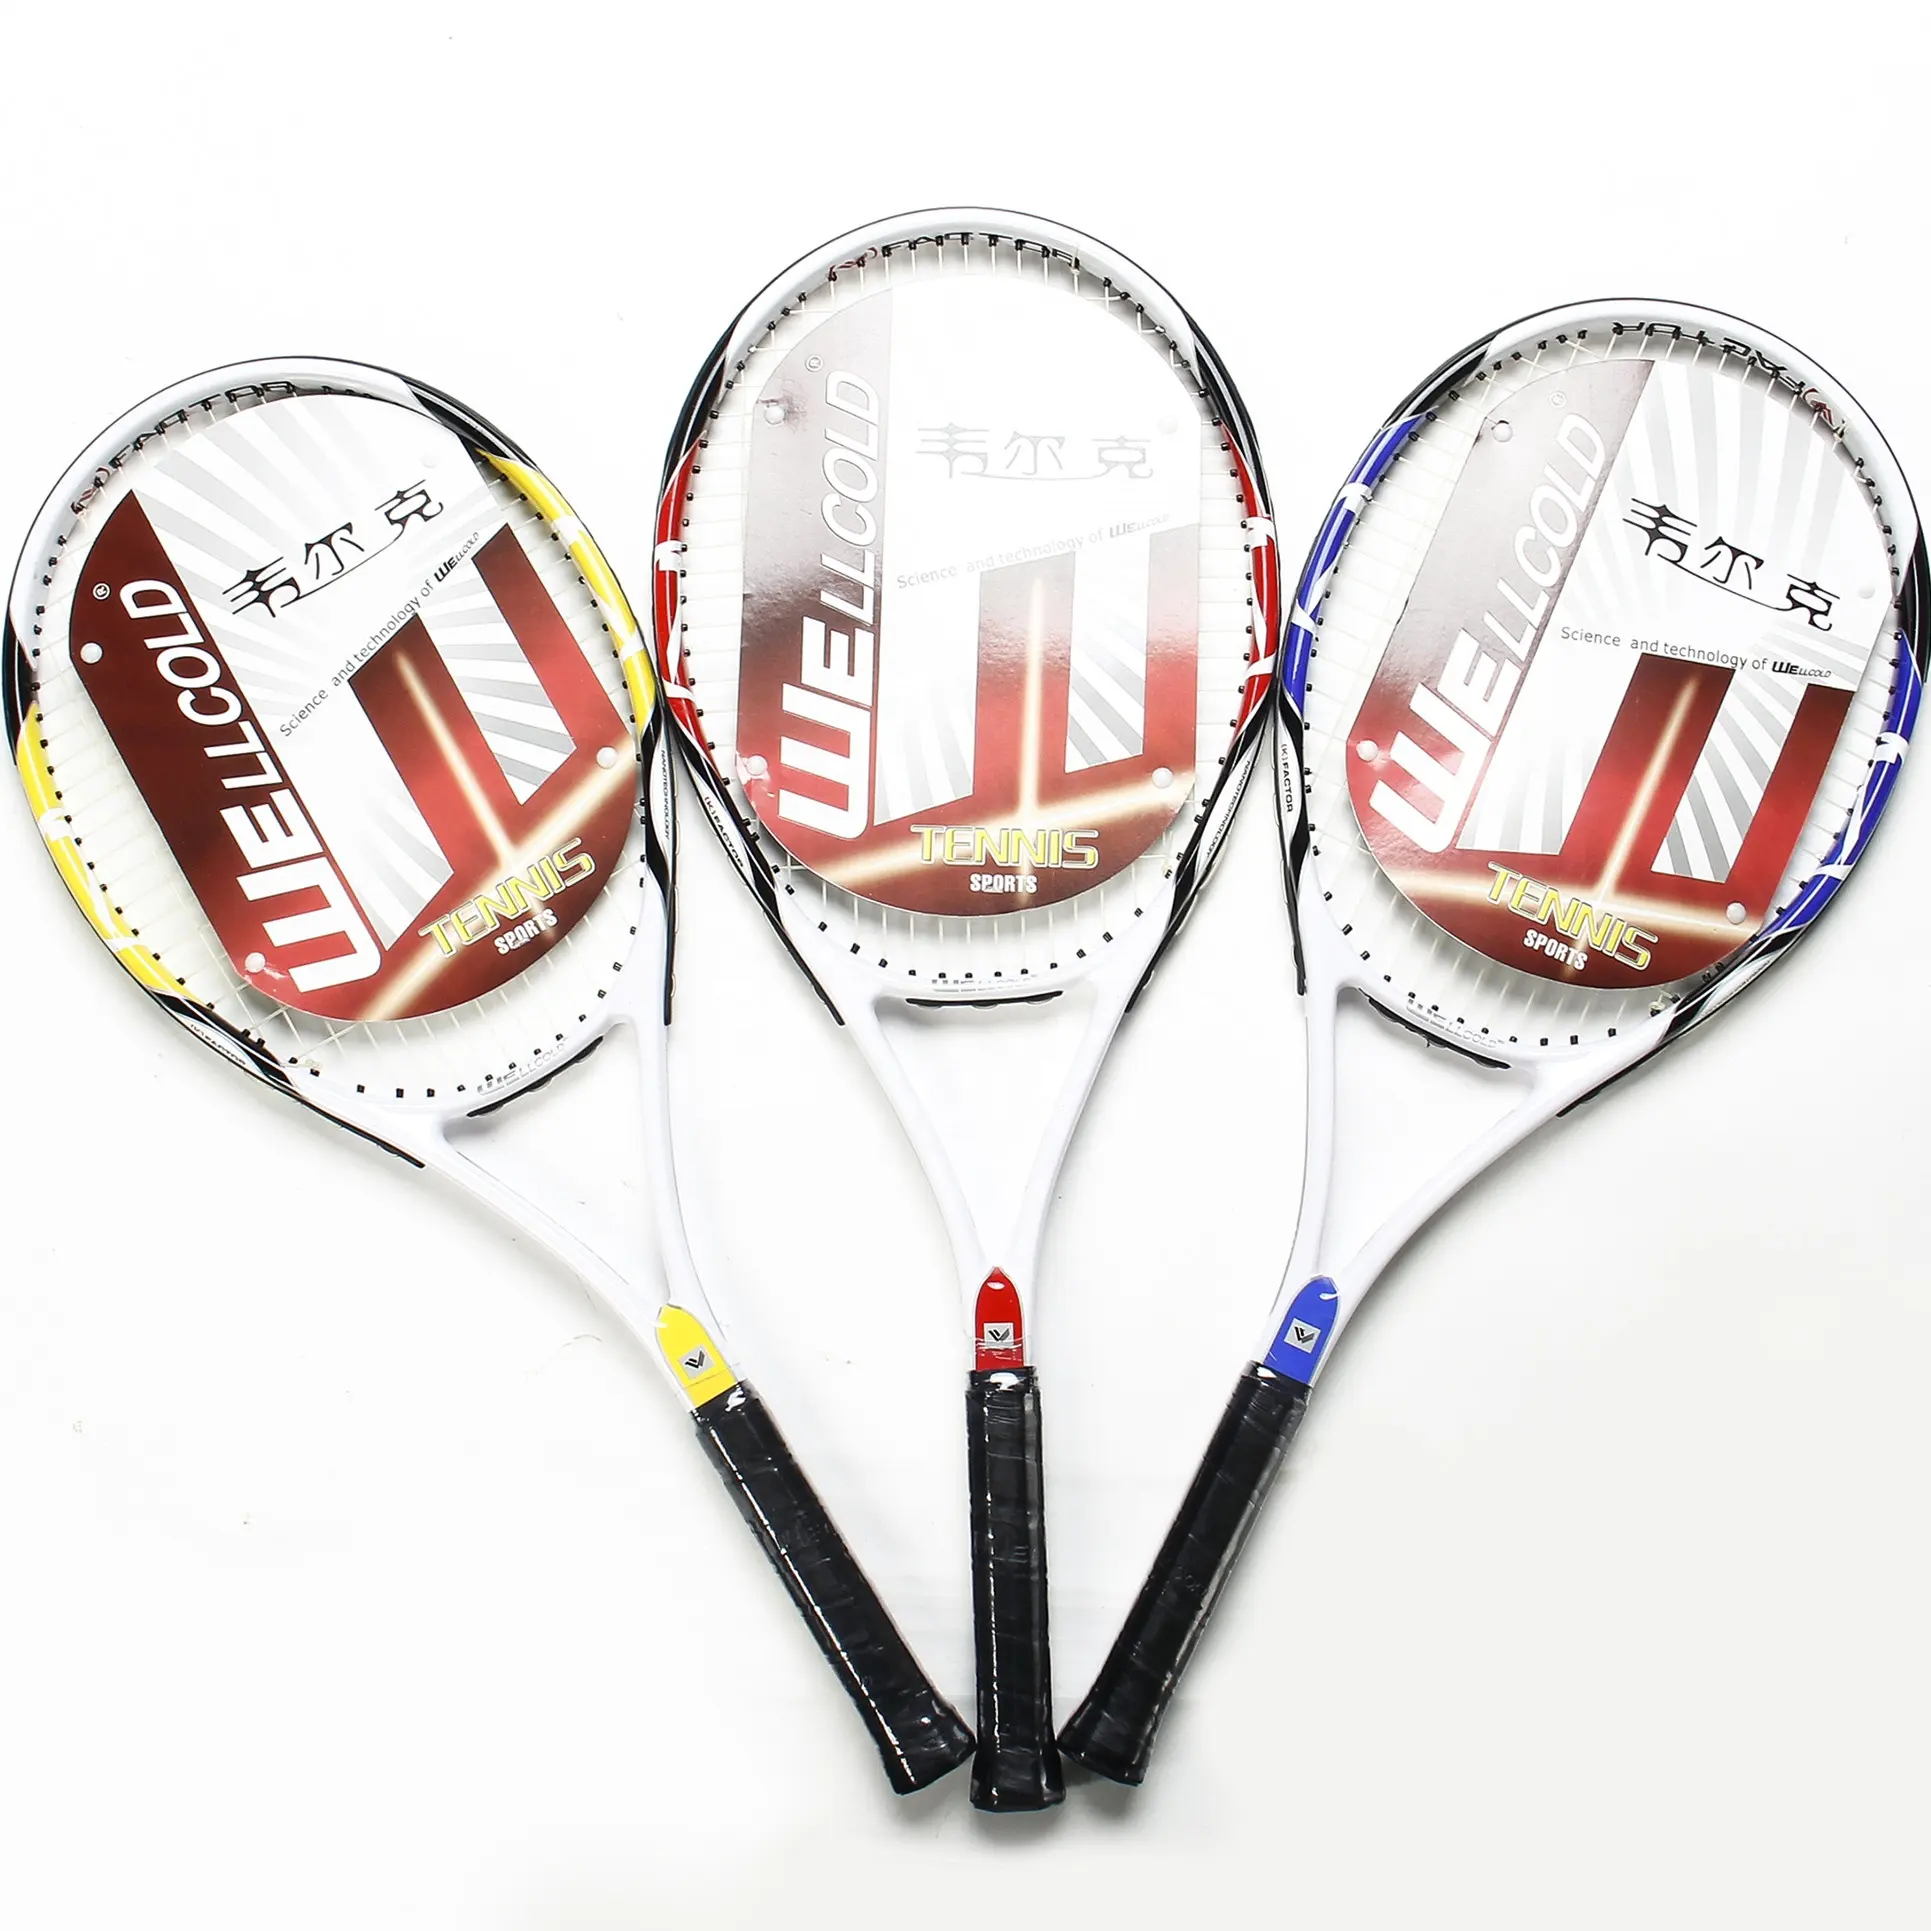 Buen proveedor, marca china de raqueta de tenis, profesional overgrip raqueta de tenis de fabricación